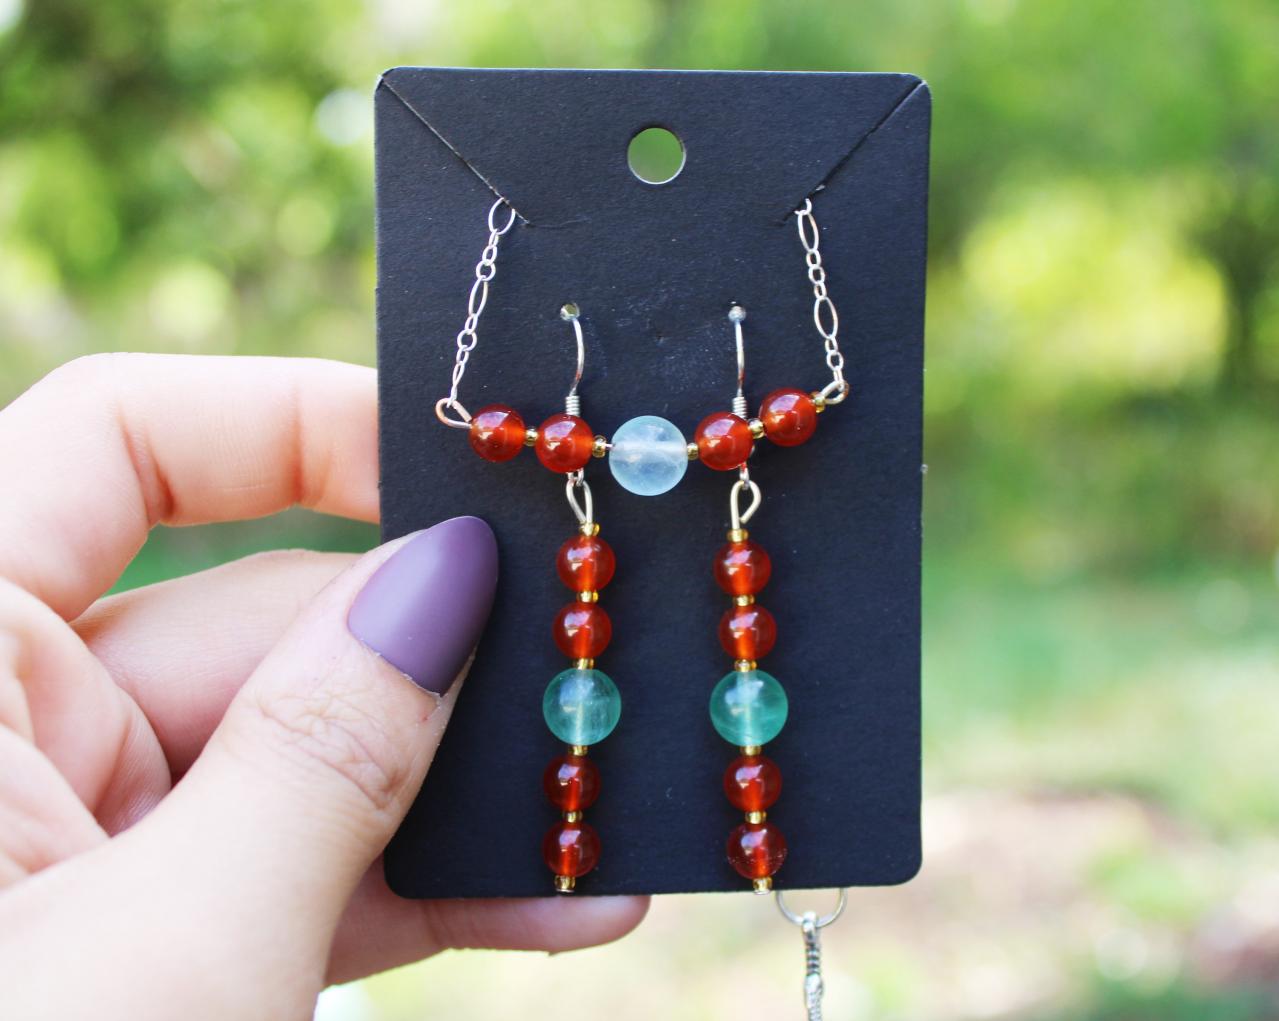 Carnelian And Fluorite Chain Bracelet And Earring Set | Handmade Orange/red Carnelian And Light Blue Fluorite Chain Set For Healing